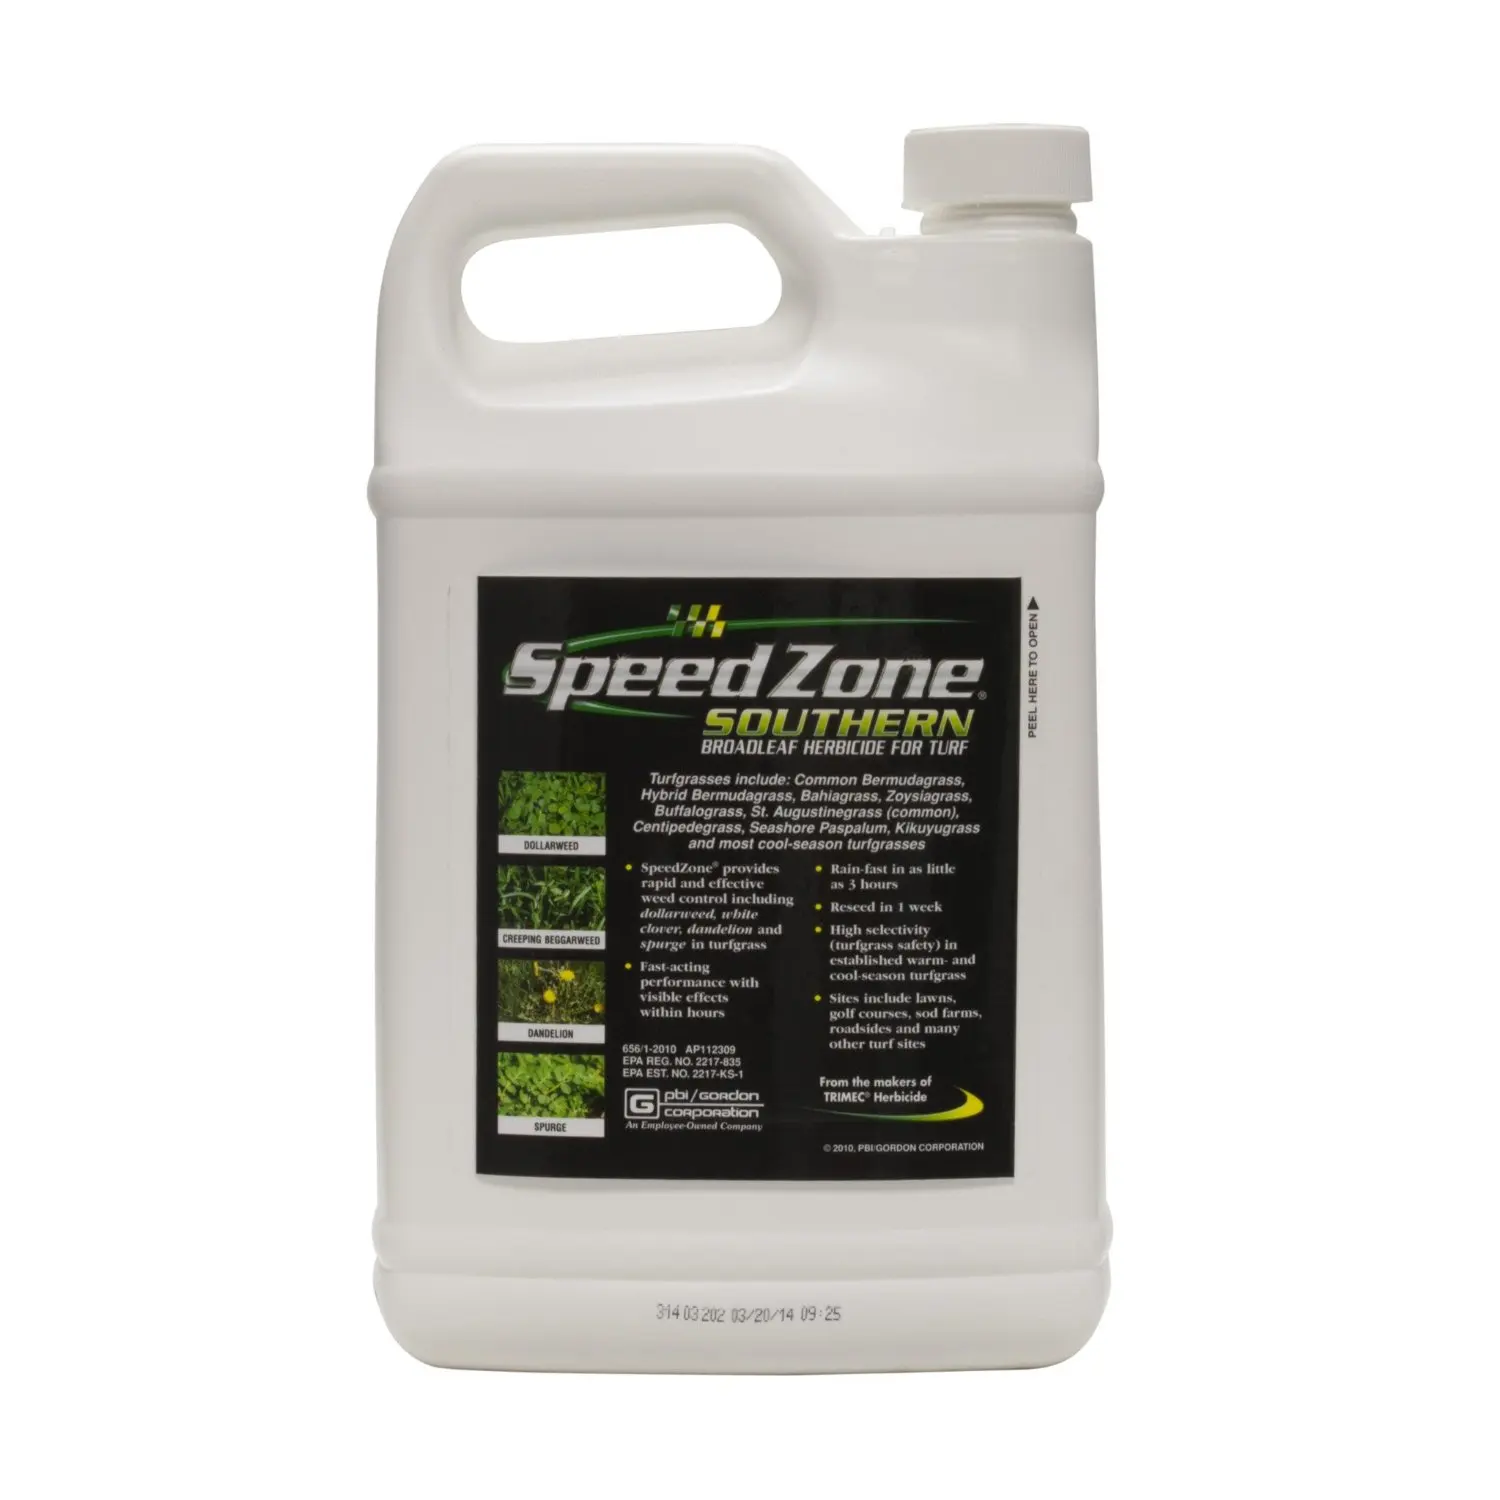 speed zone broadleaf herbicide